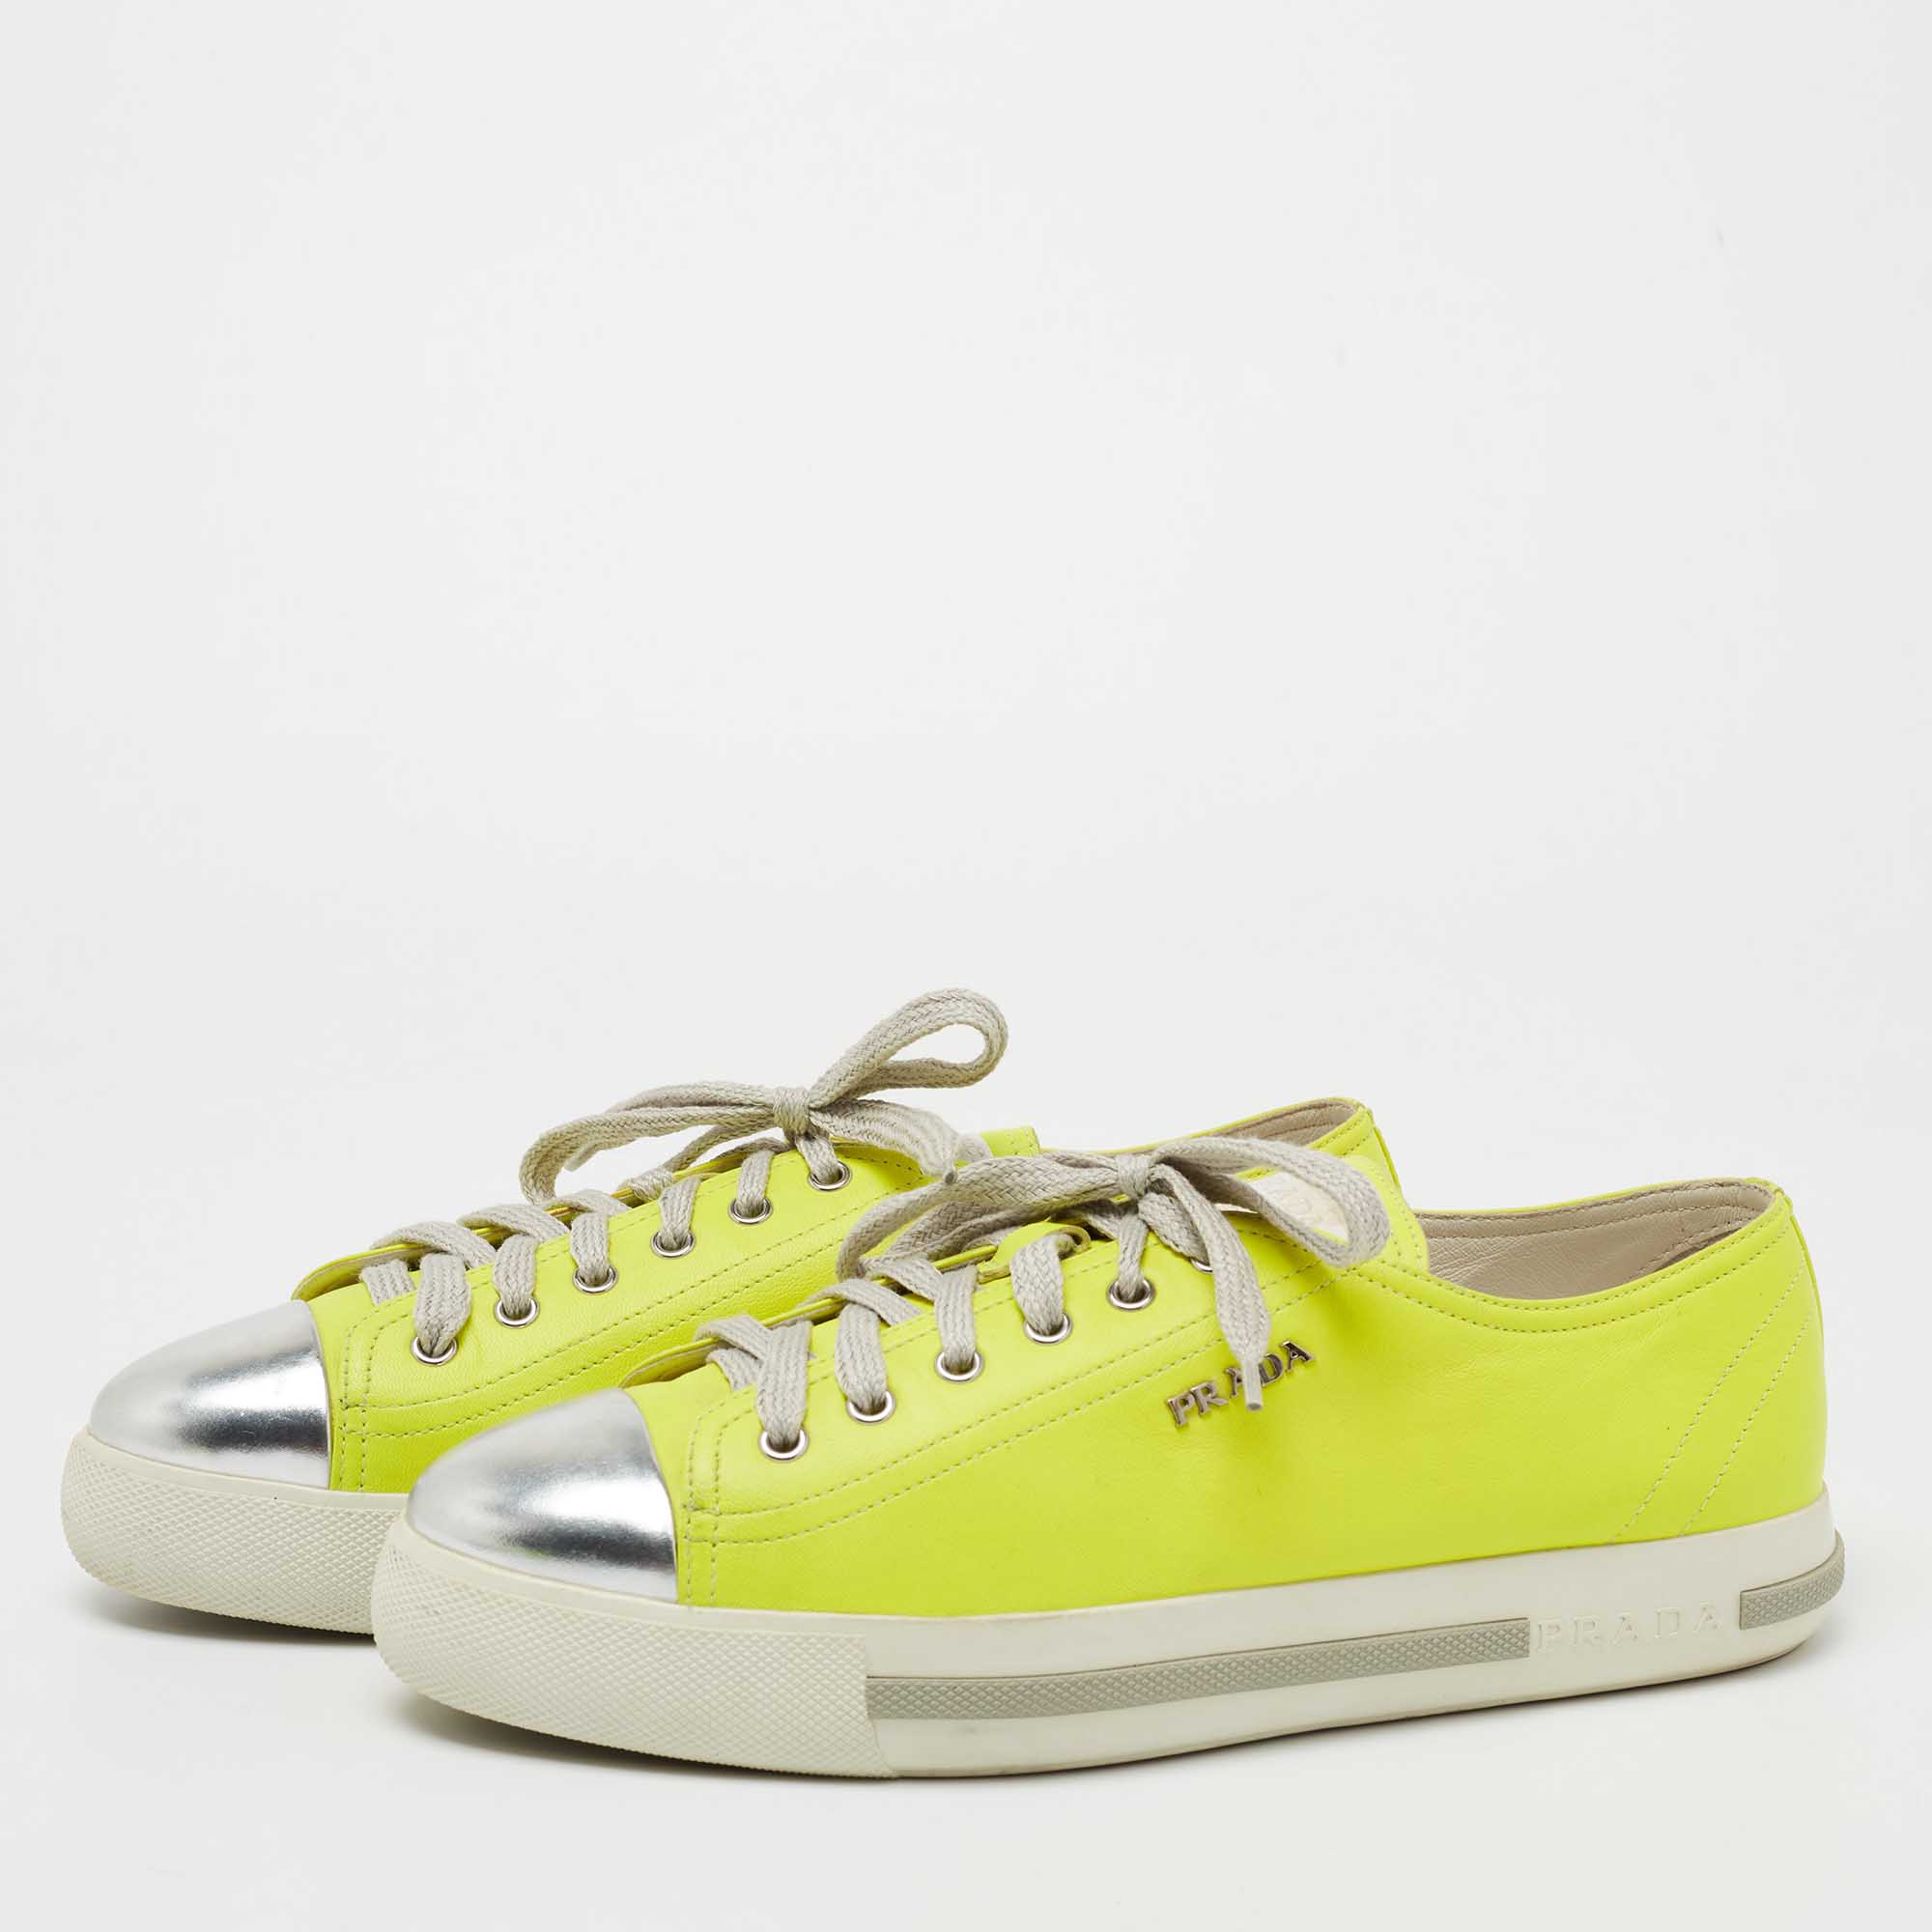 

Prada Sport Neon Yellow/Silver Leather Cap Toe Low Top Sneakers Size